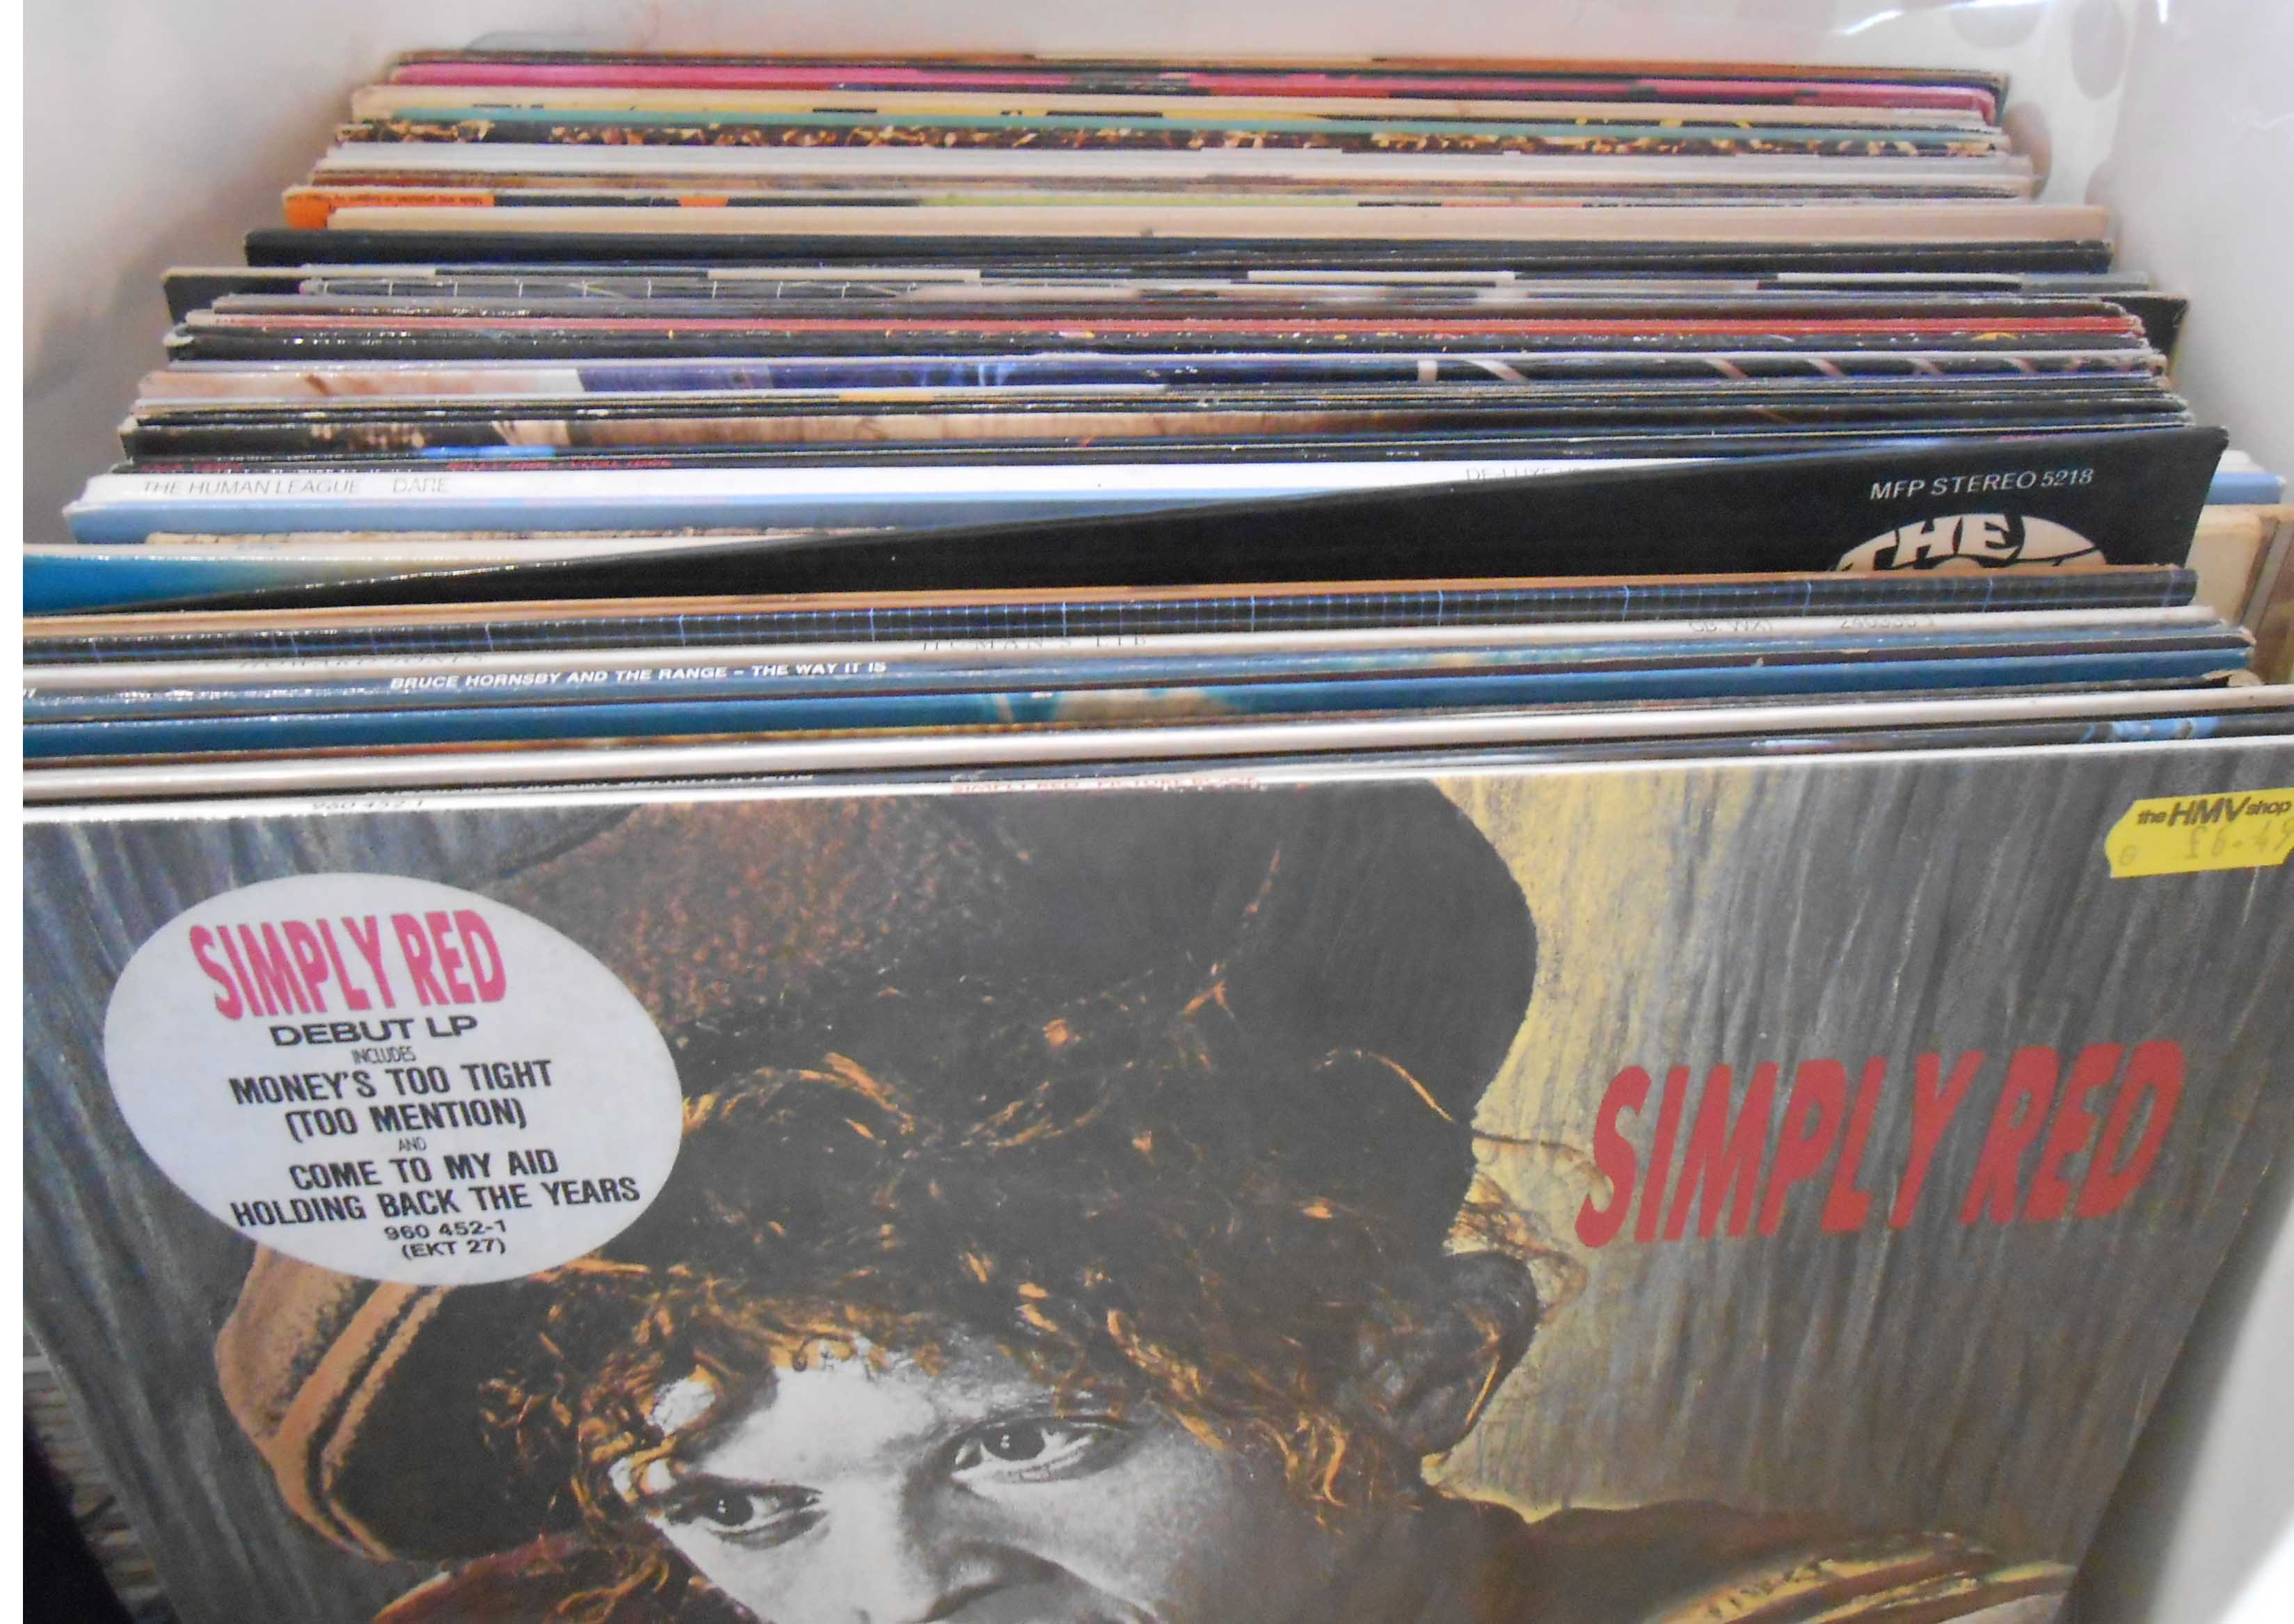 A bag containing assorted vinyl LPs including Ian Drury, Bruce Springsteen, U2, Blondie, Fleetwood